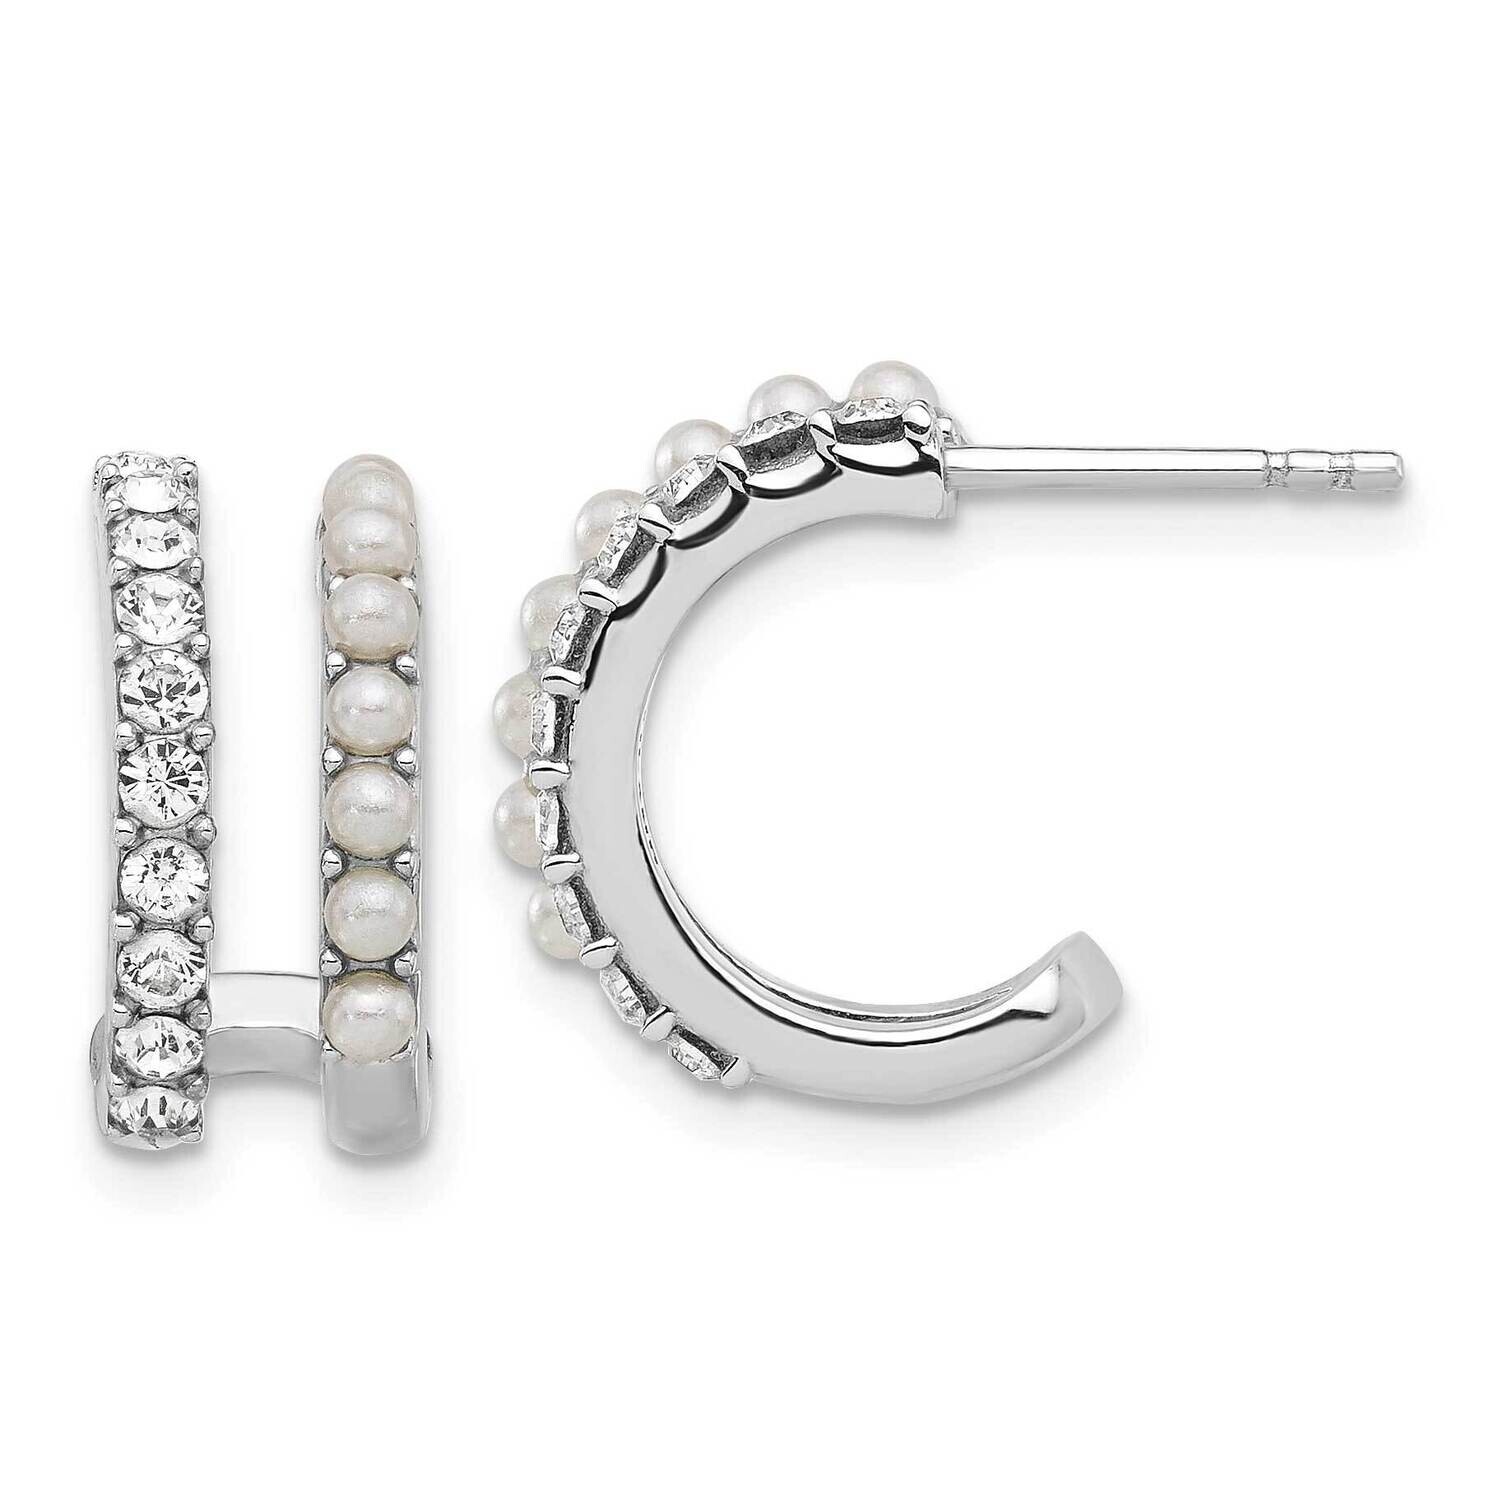 Rh-Plated Fwc Pearl Crystal Double Post Hoop Earrings Sterling Silver QE17236